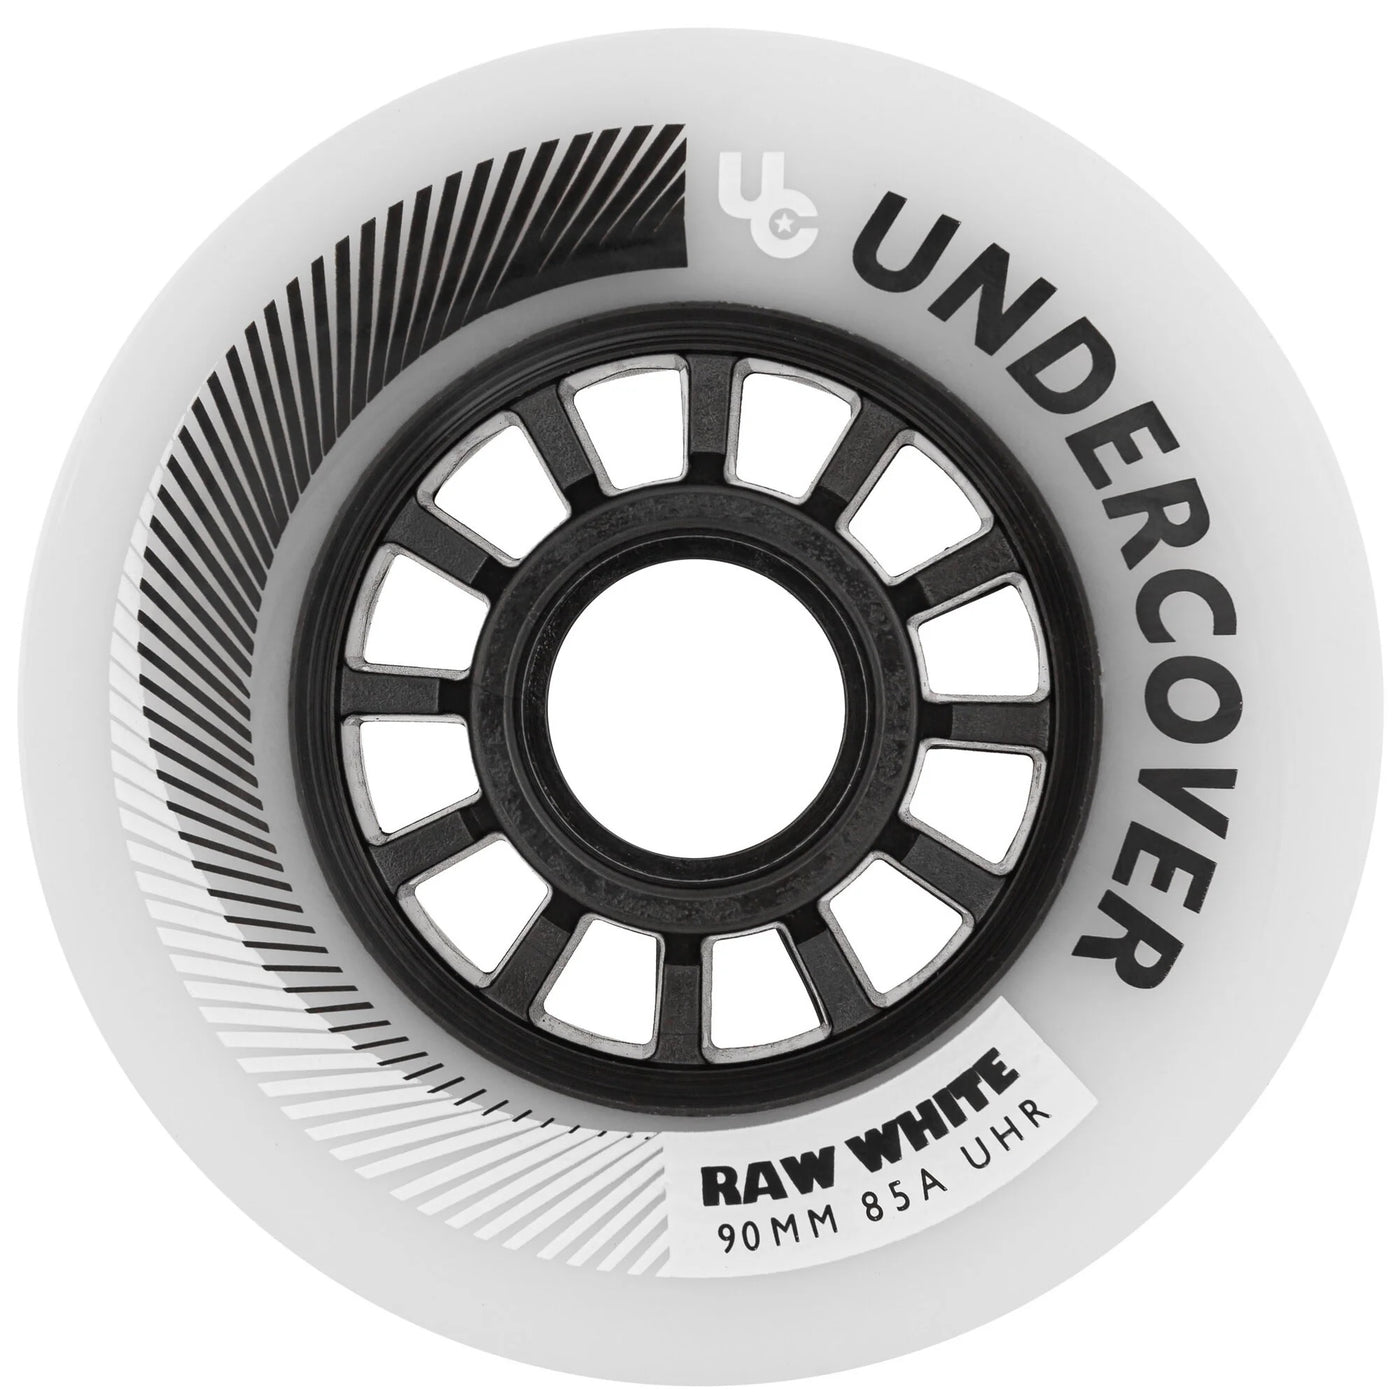 Roues Undercover Raw White 90mm 85a - Lot de 4